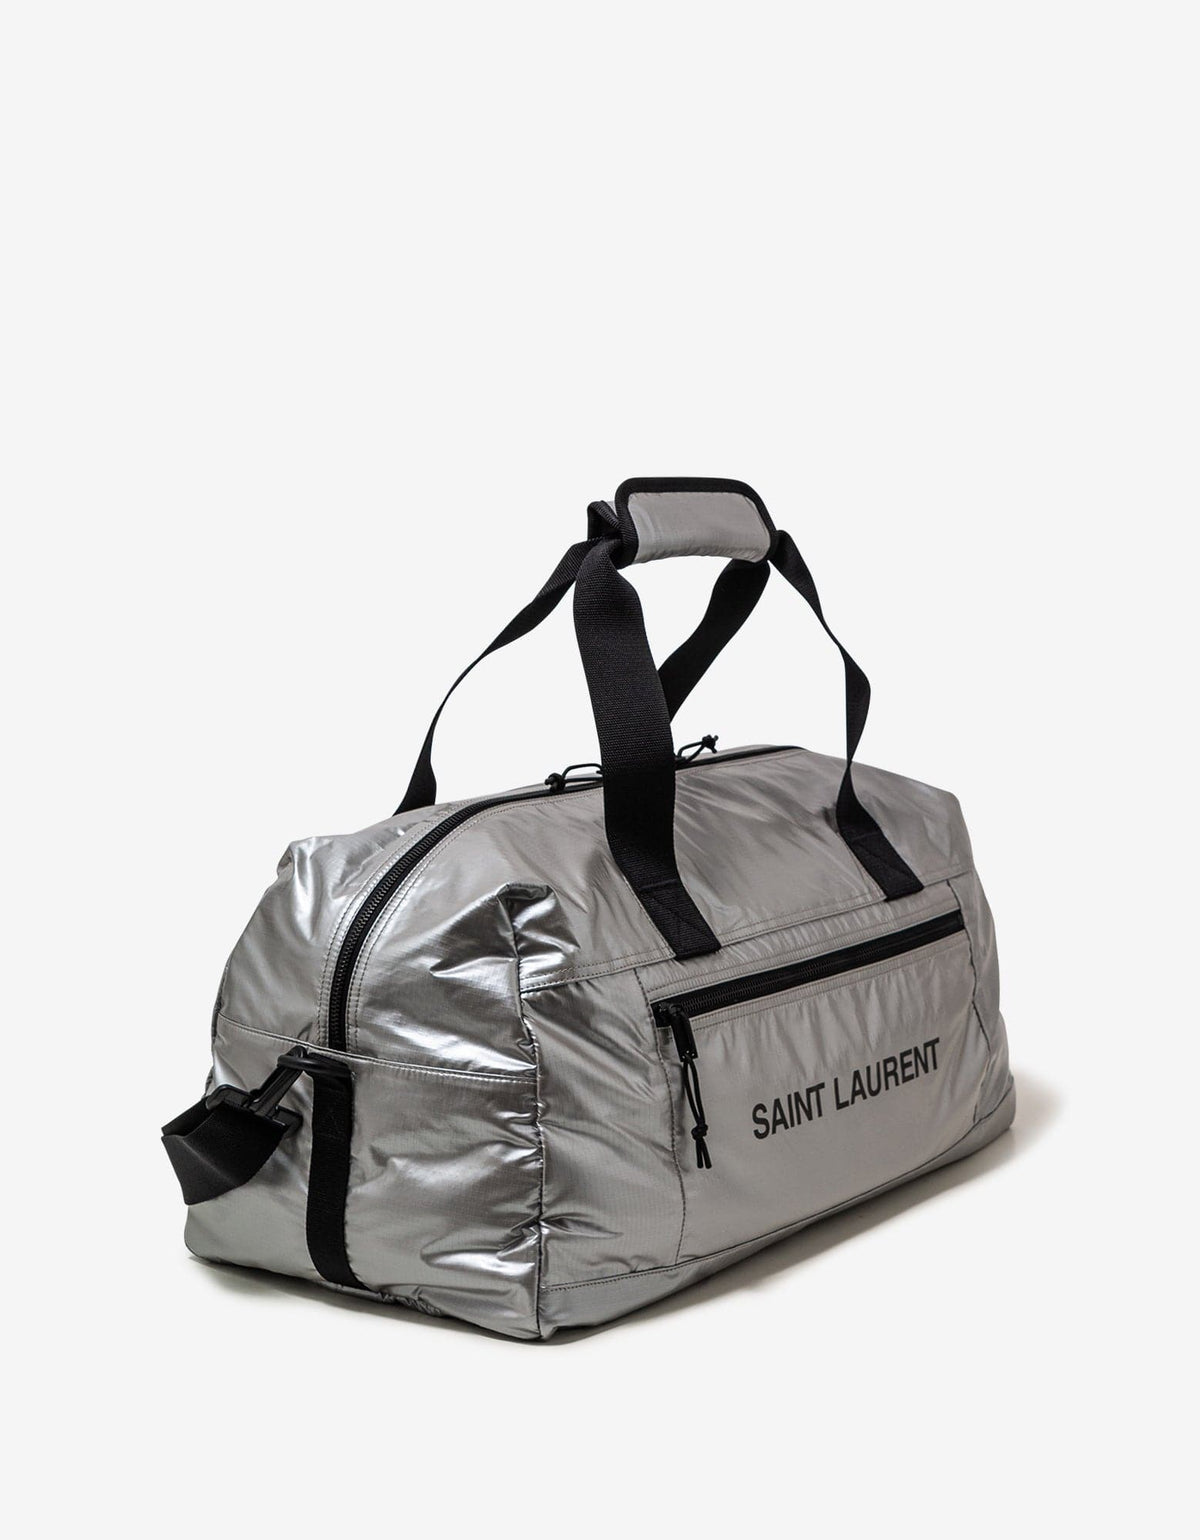 Saint Laurent Metallized Nylon Nuxx Duffle Bag